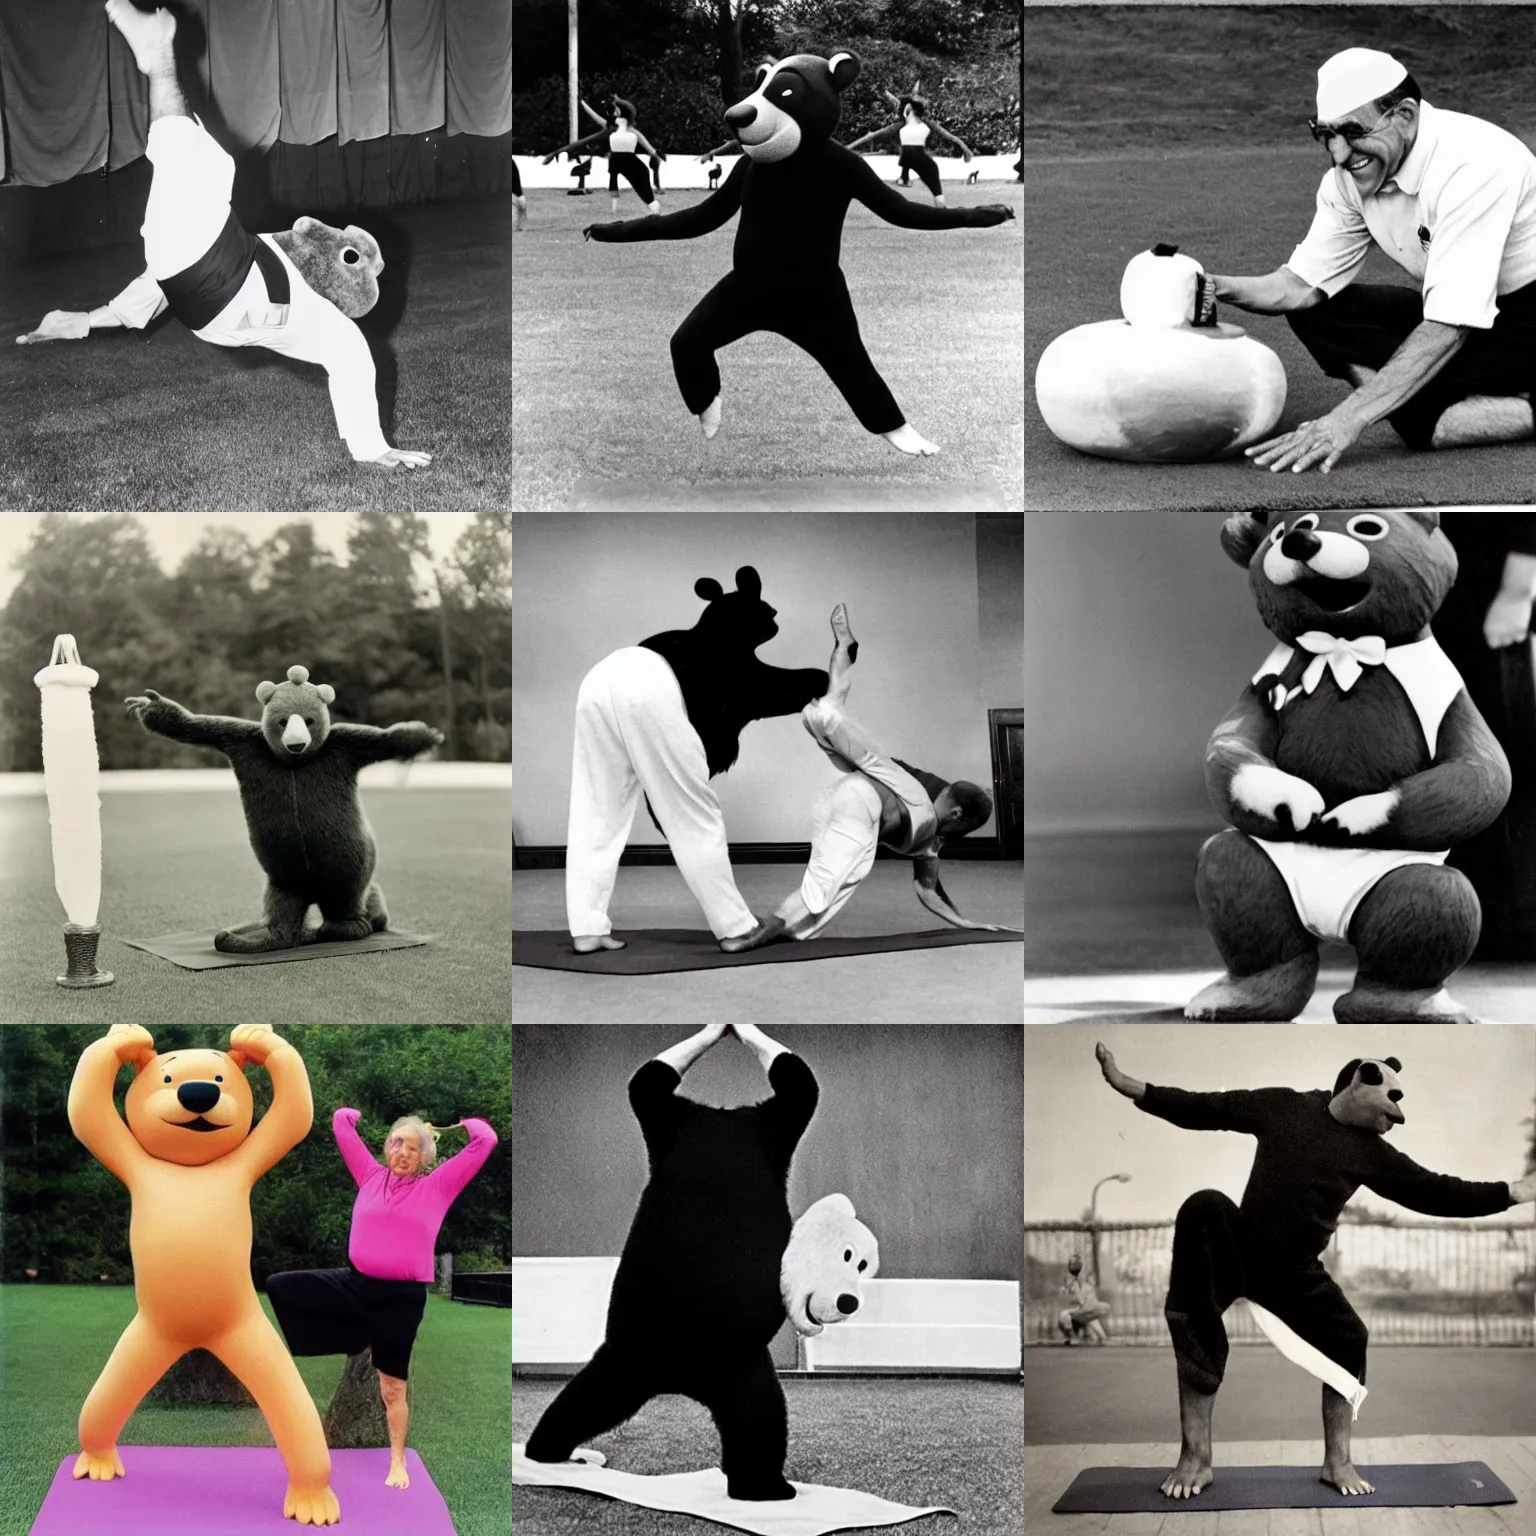 Prompt: yogi bear doing yoga with yogi berra